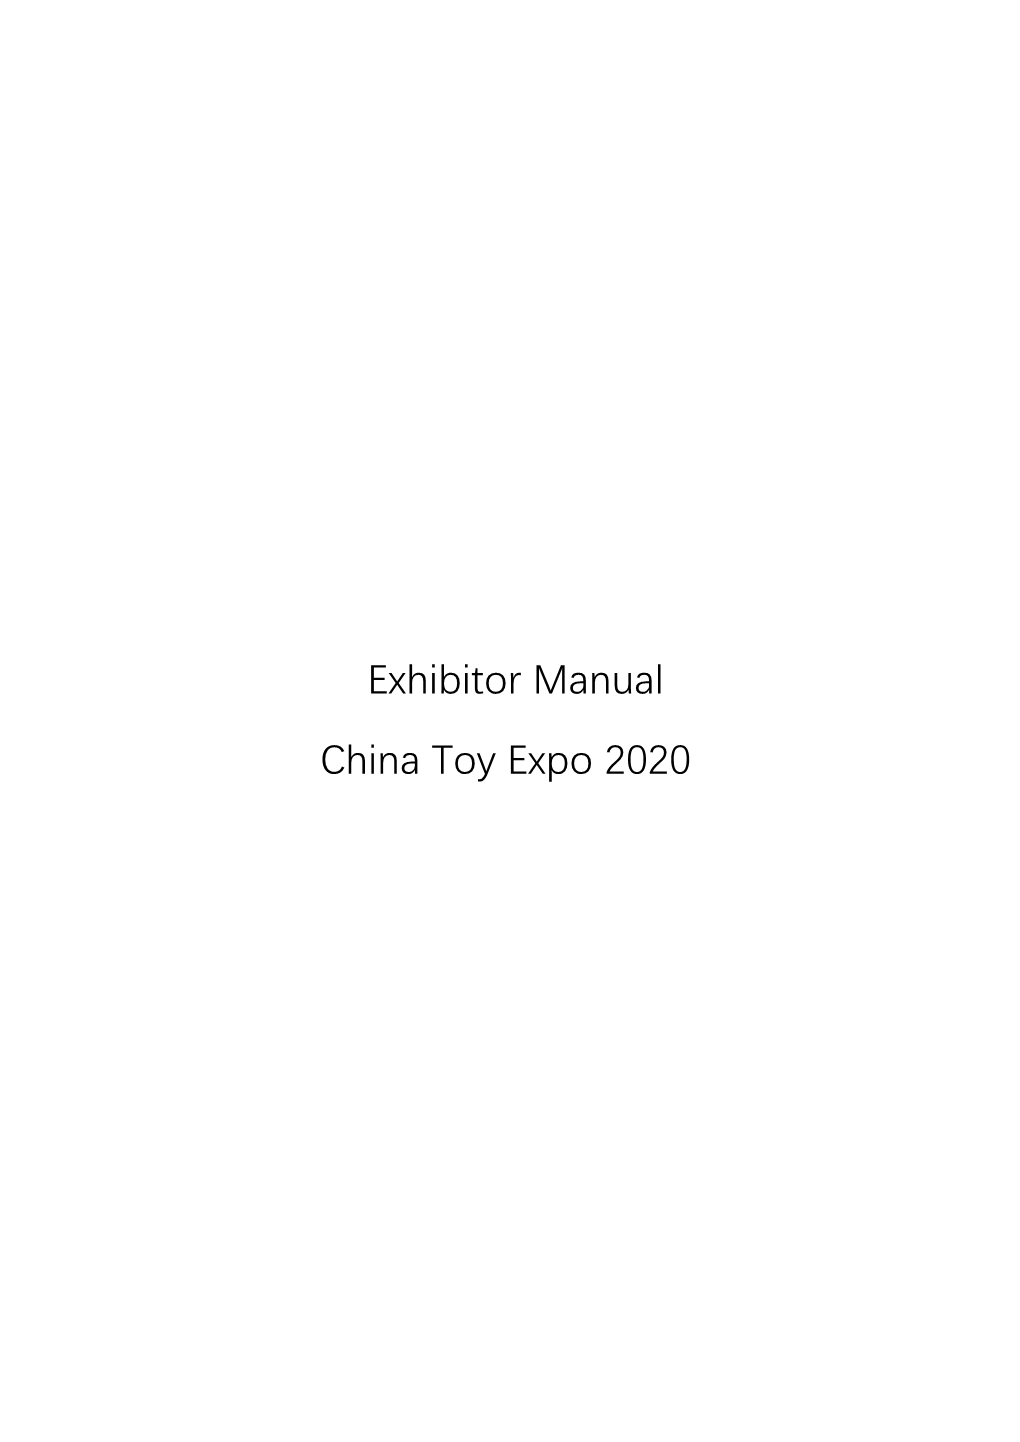 Exhibitor Manual China Toy Expo 2020